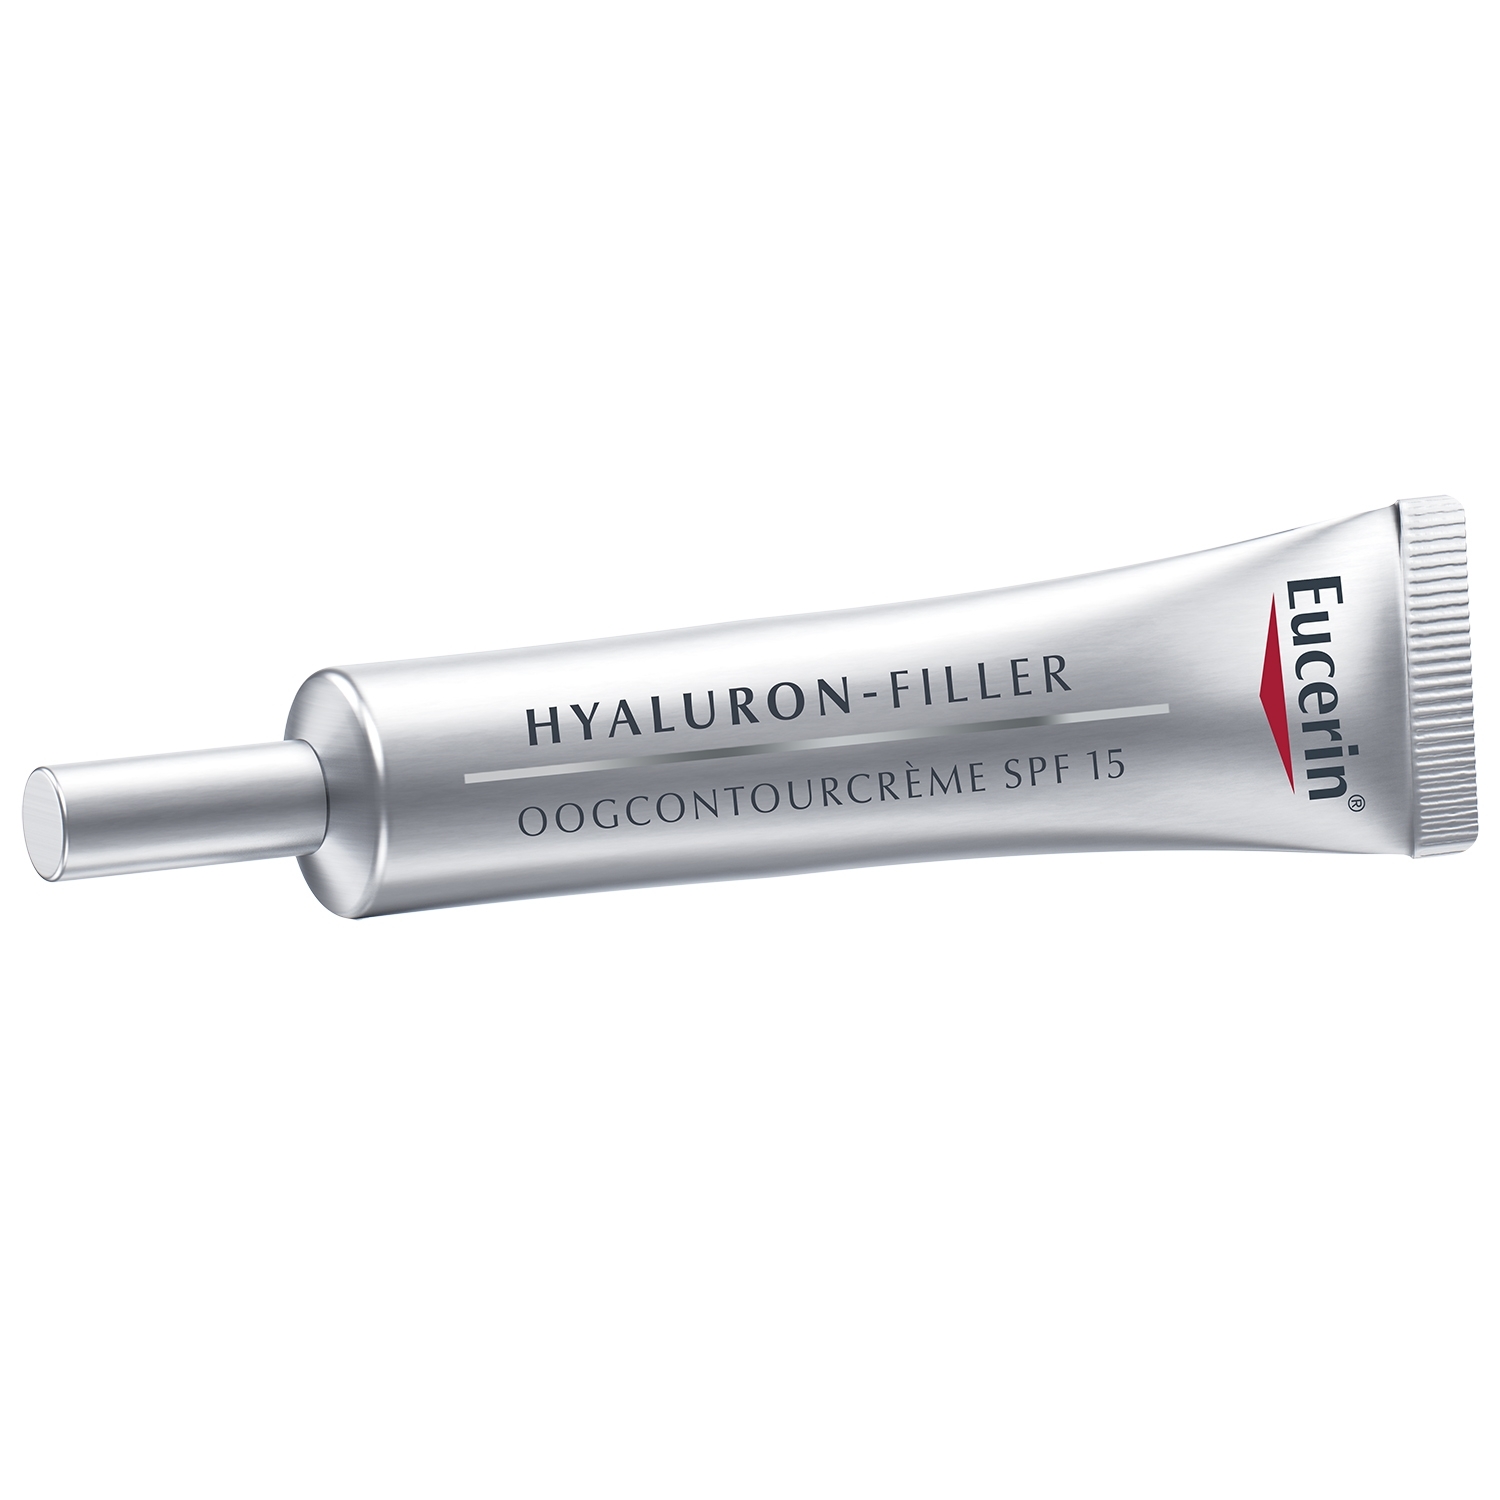 Eucerin Hyaluron-filler Crème yeux anti-rides - 15 ml